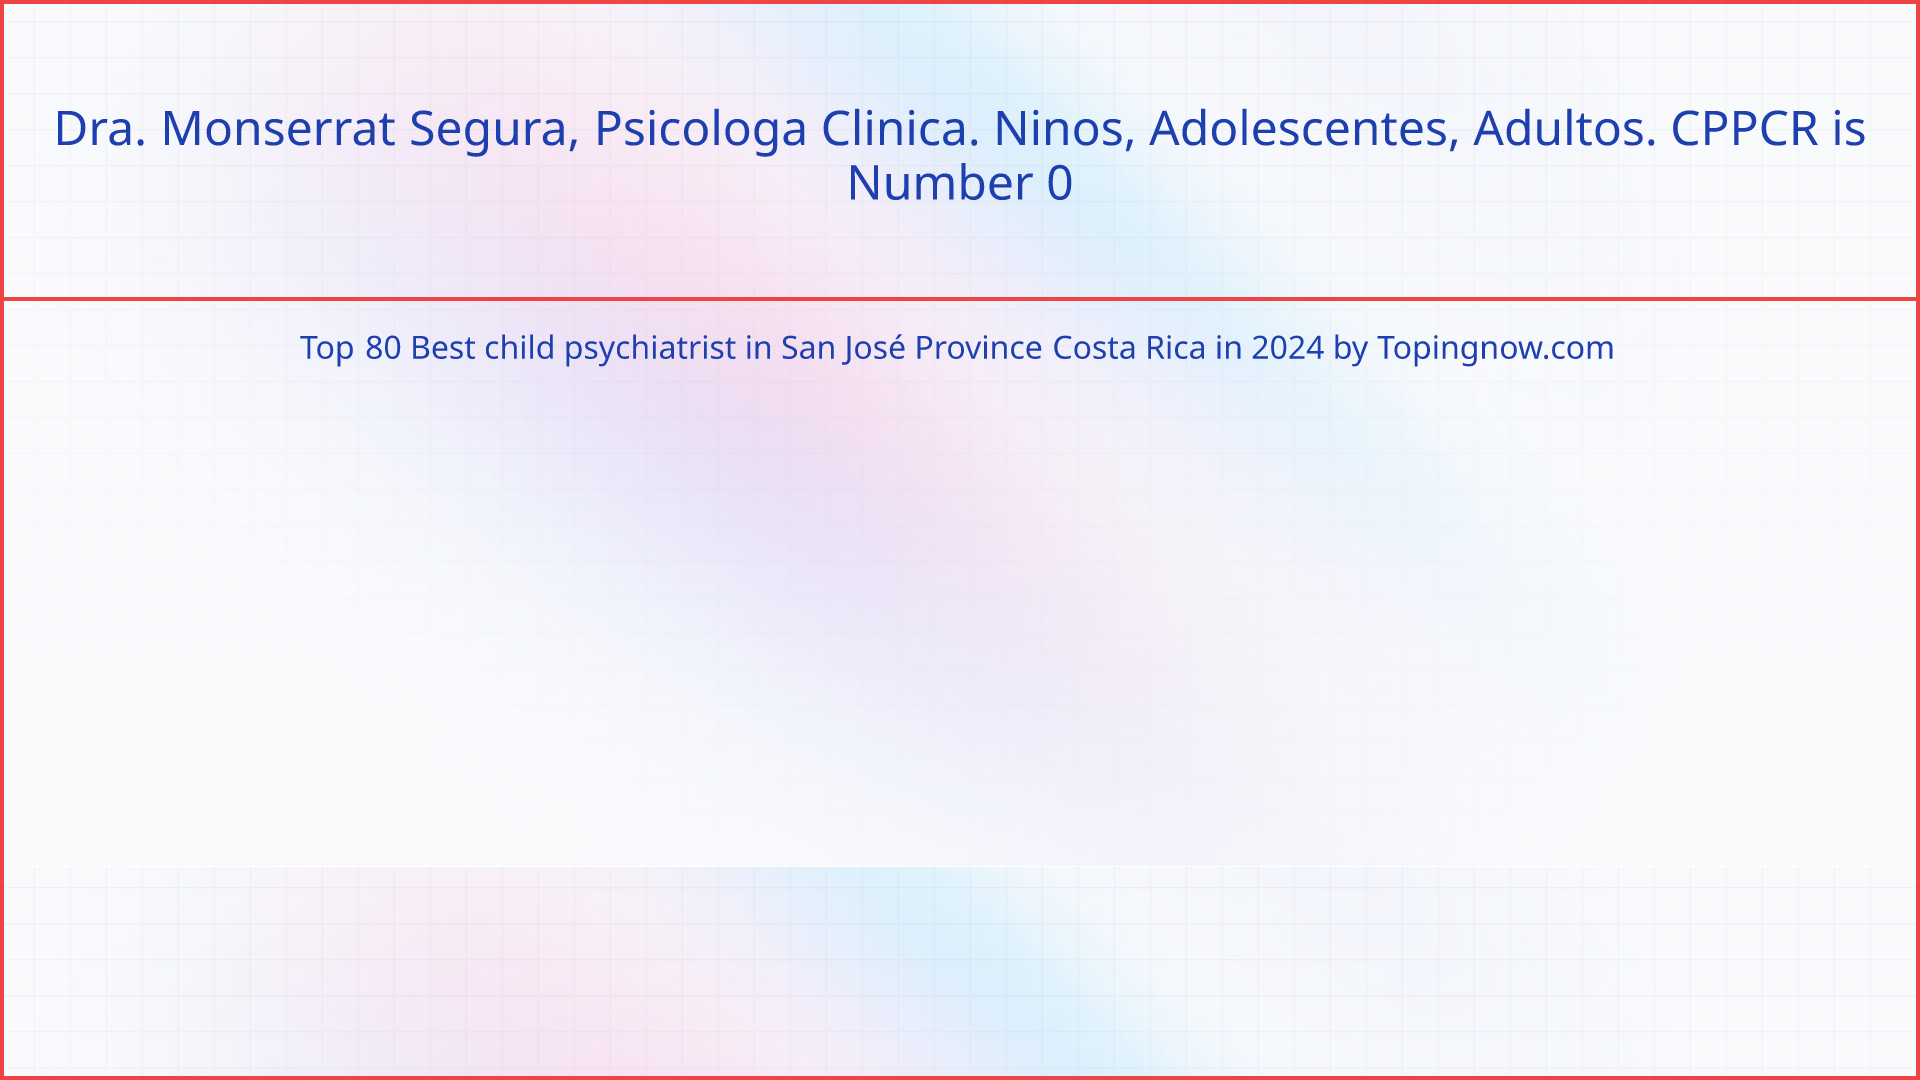 Dra. Monserrat Segura, Psicologa Clinica. Ninos, Adolescentes, Adultos. CPPCR: Top 80 Best child psychiatrist in San José Province Costa Rica in 2024